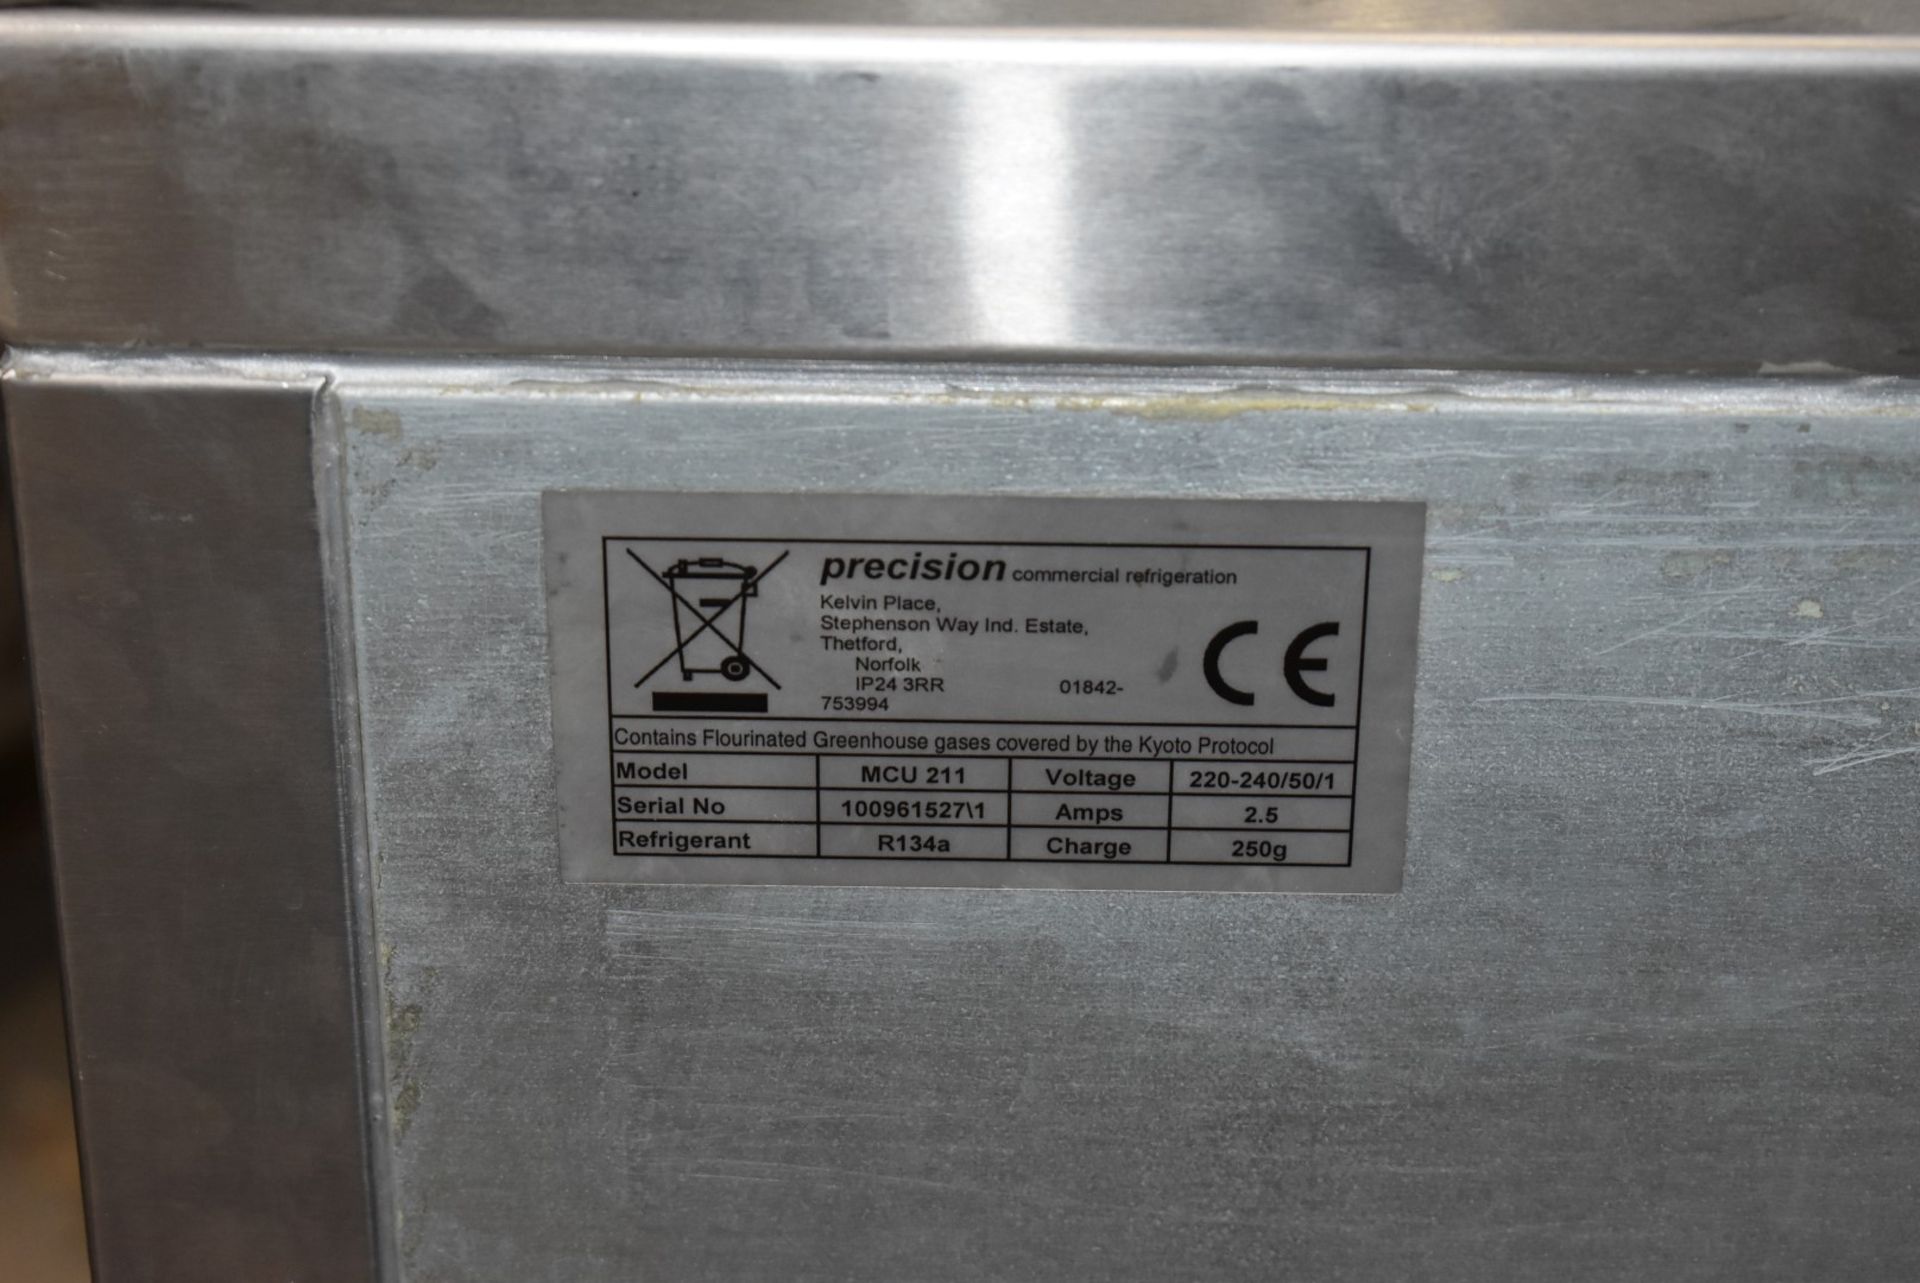 1 x Precision Two Door Countertop Refrigerator - Model MCU 211 - Dimensions: H87 x W134 x D65 cms - Image 7 of 12